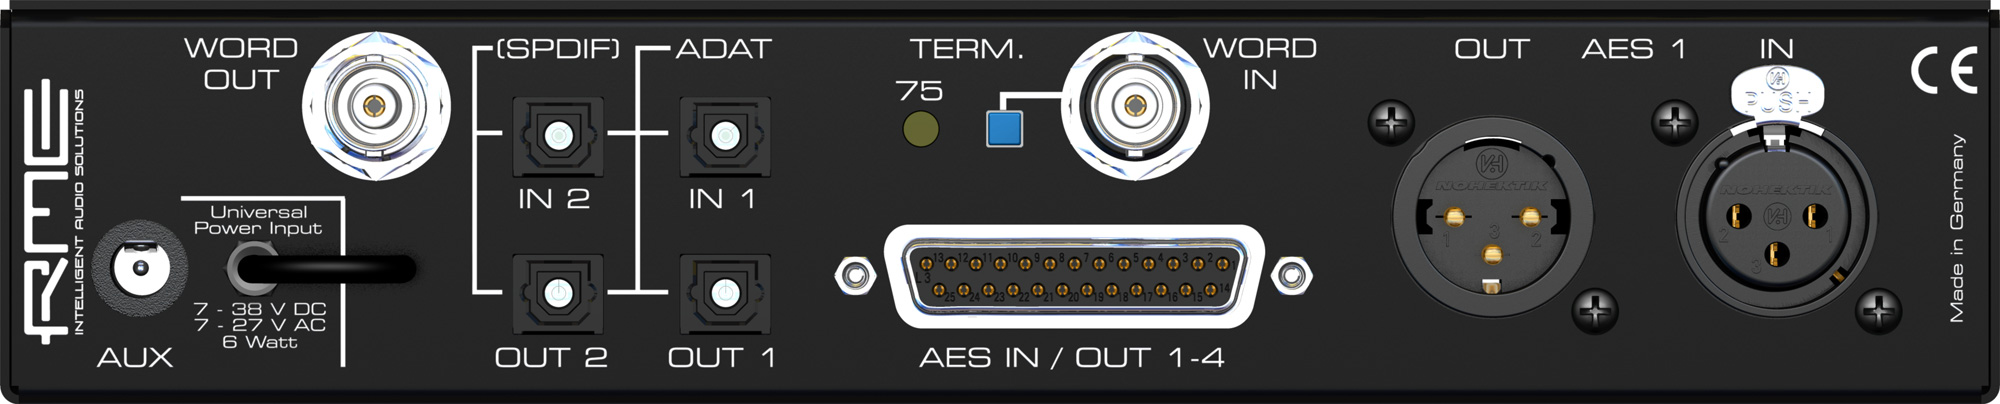 ADI-4 DD 8-Channel 24-Bit/96kHz AES.ADAT format converter